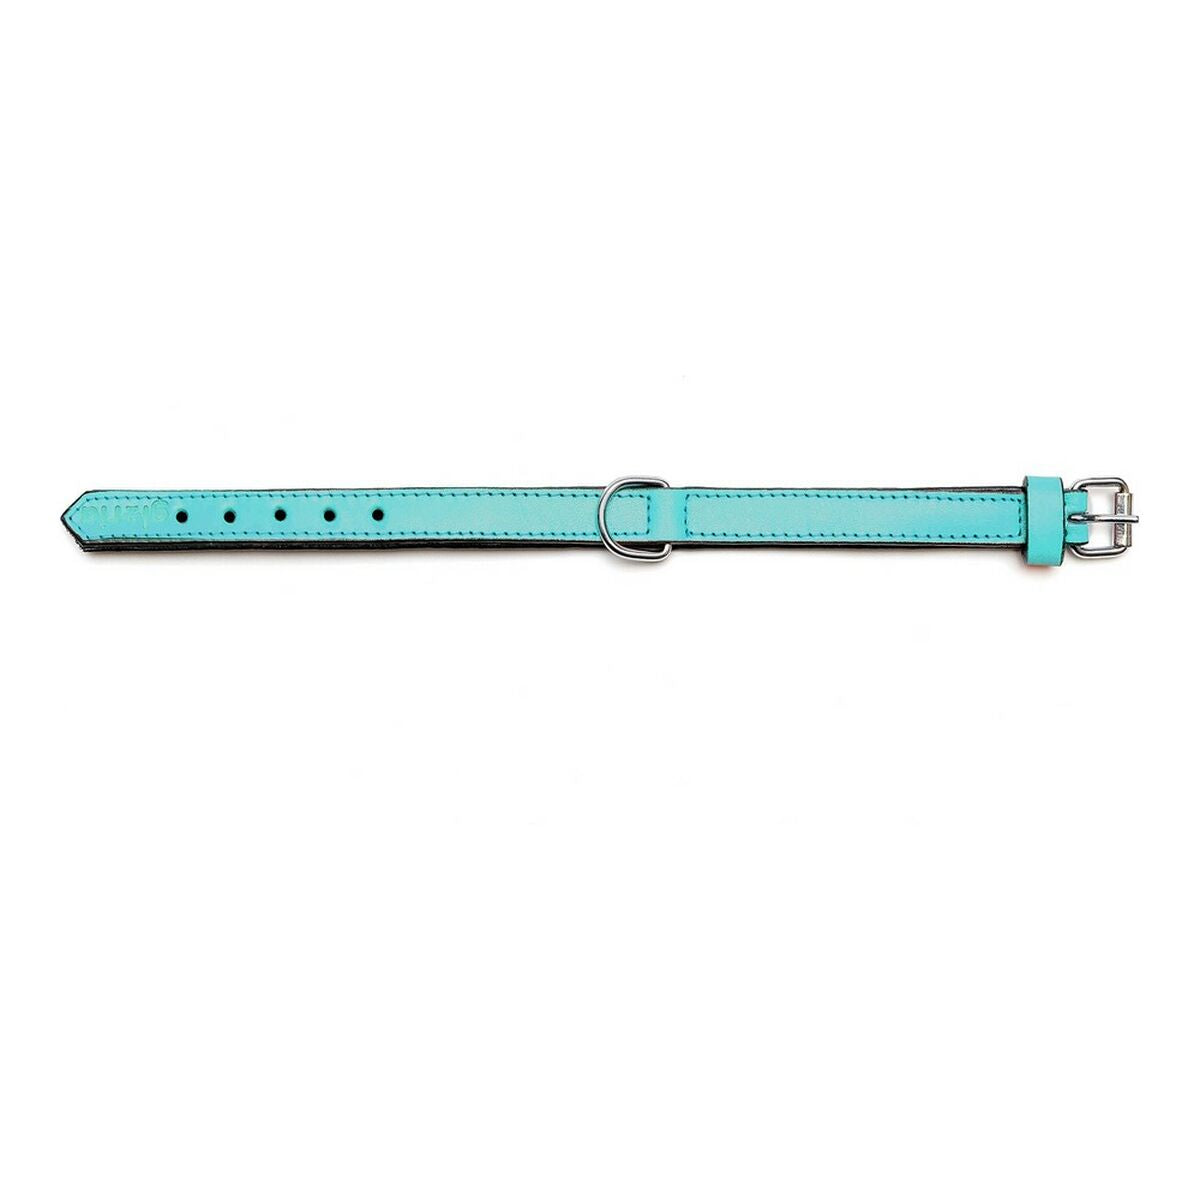 Dog collar Gloria Padded Turquoise 45 cm (45 x 2 cm)